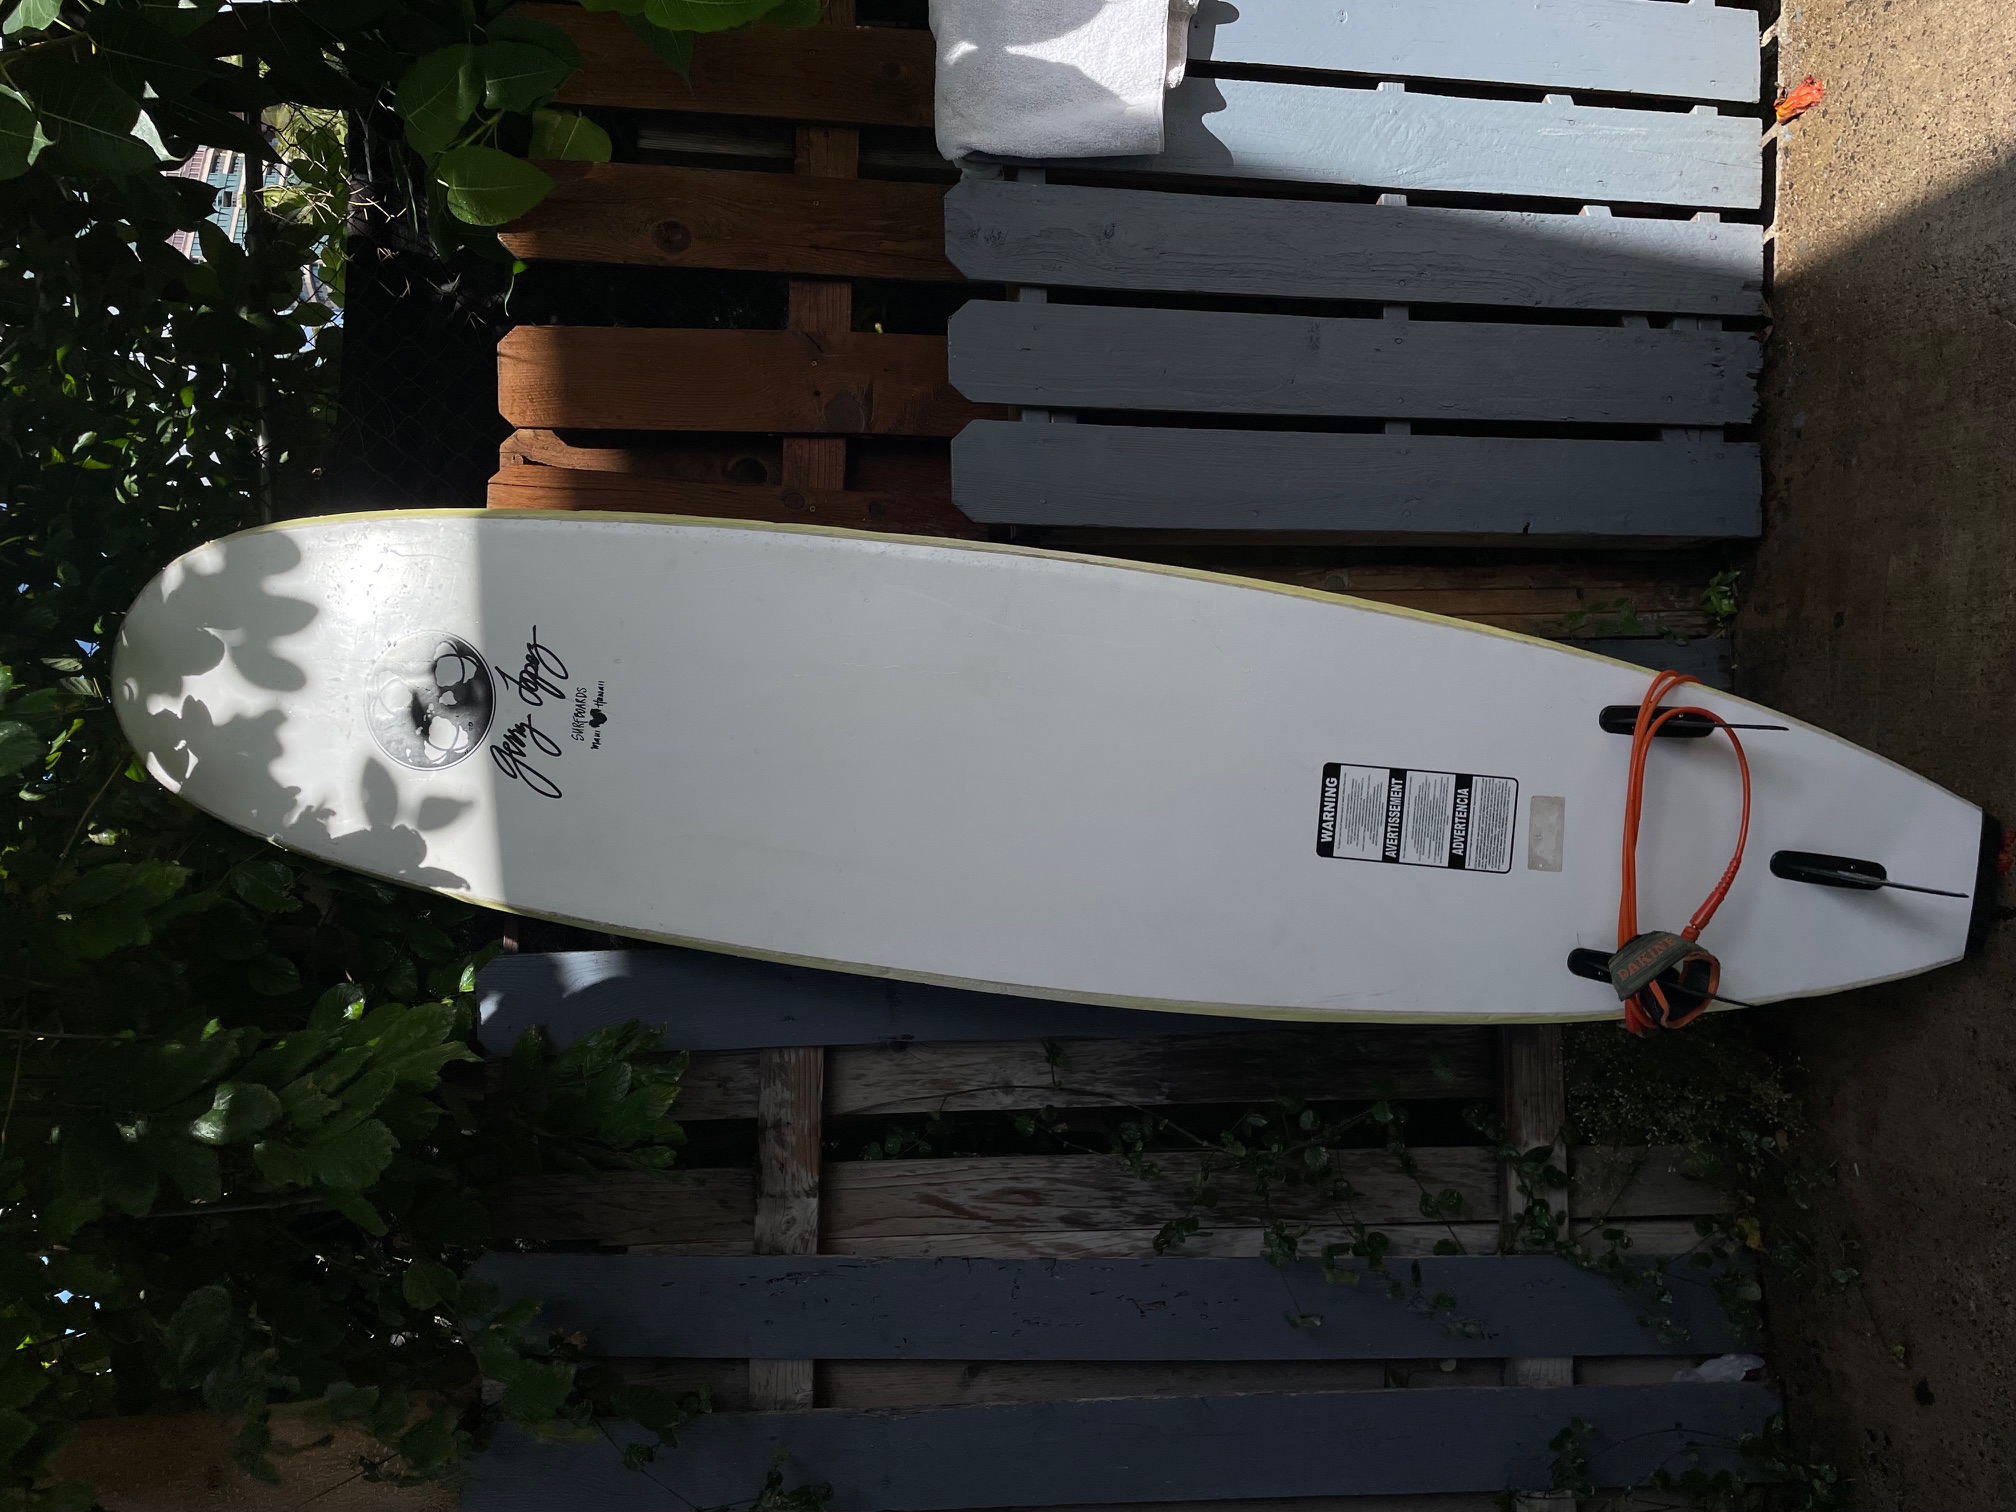 2023 Gerry Lopez Surfboard